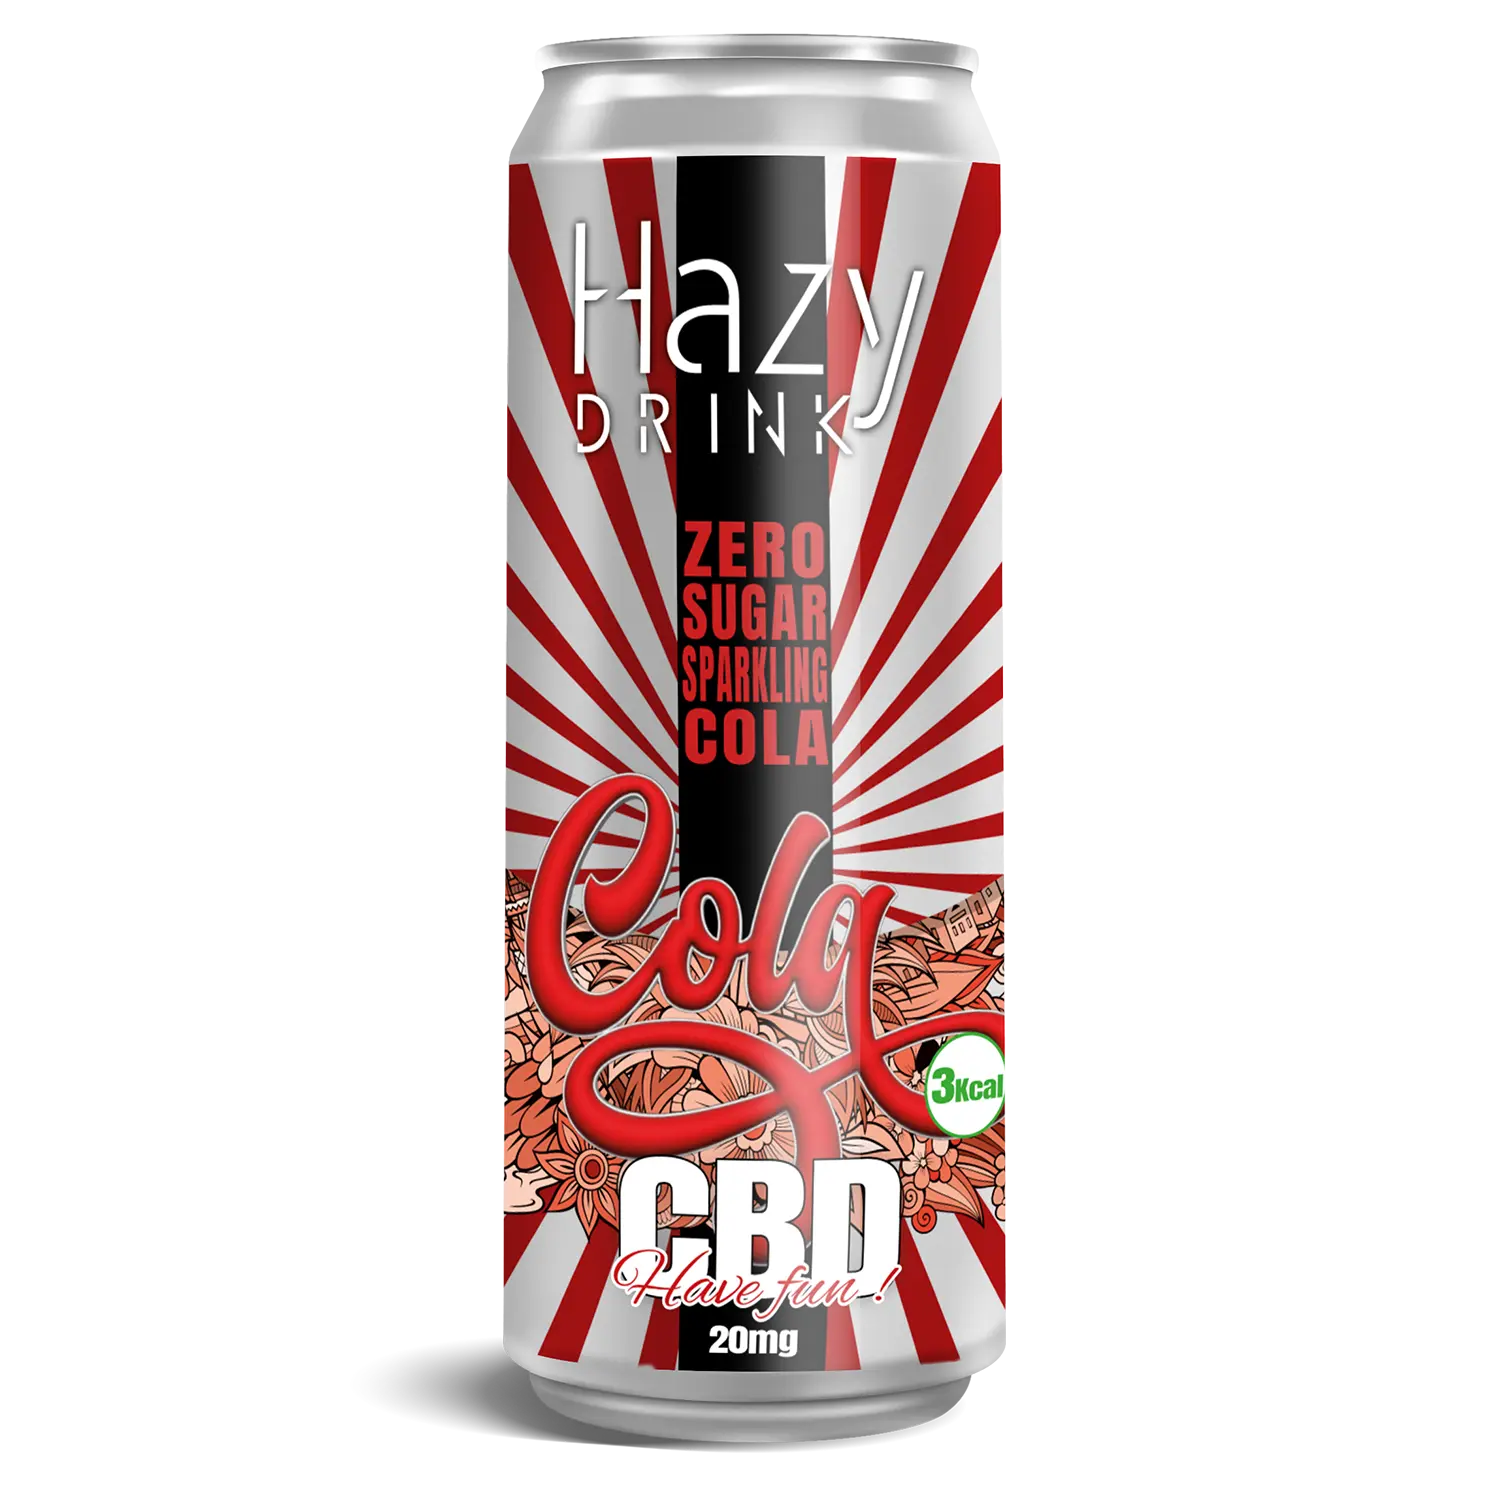 Hazy Drink 20mg CBD boisson gazeuse Cola